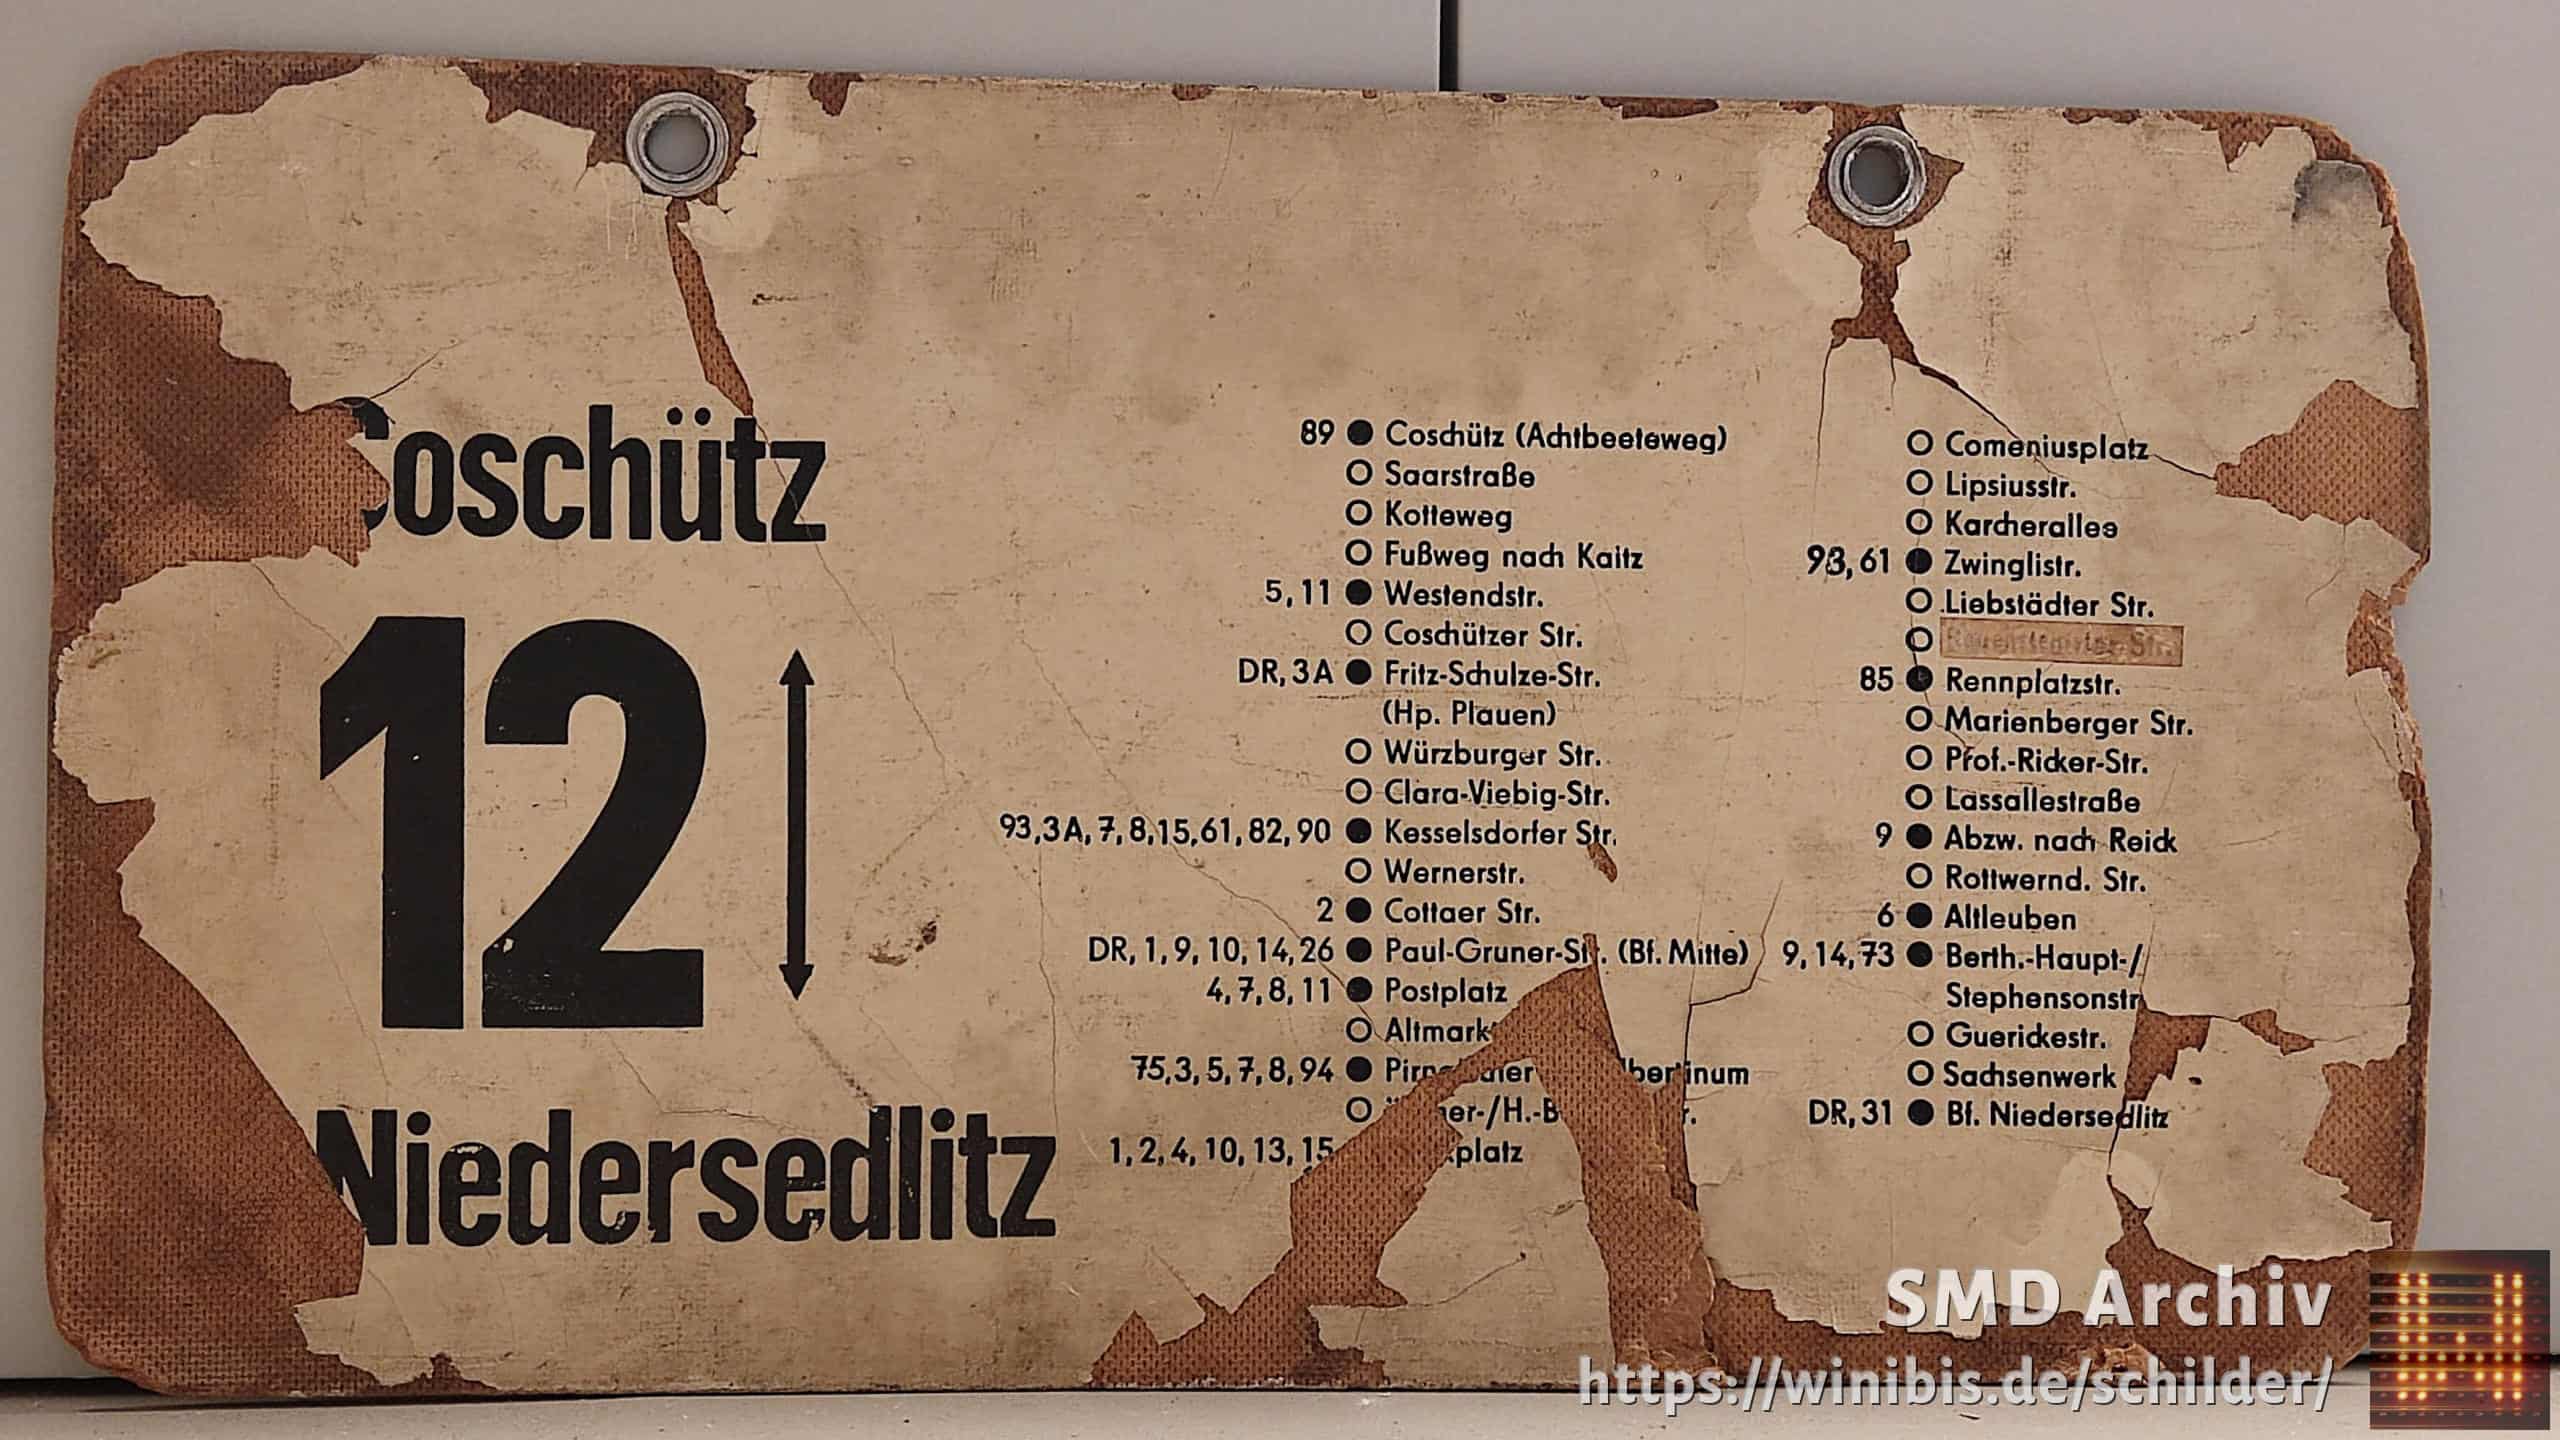 12 Coschütz – Niedersedlitz #2